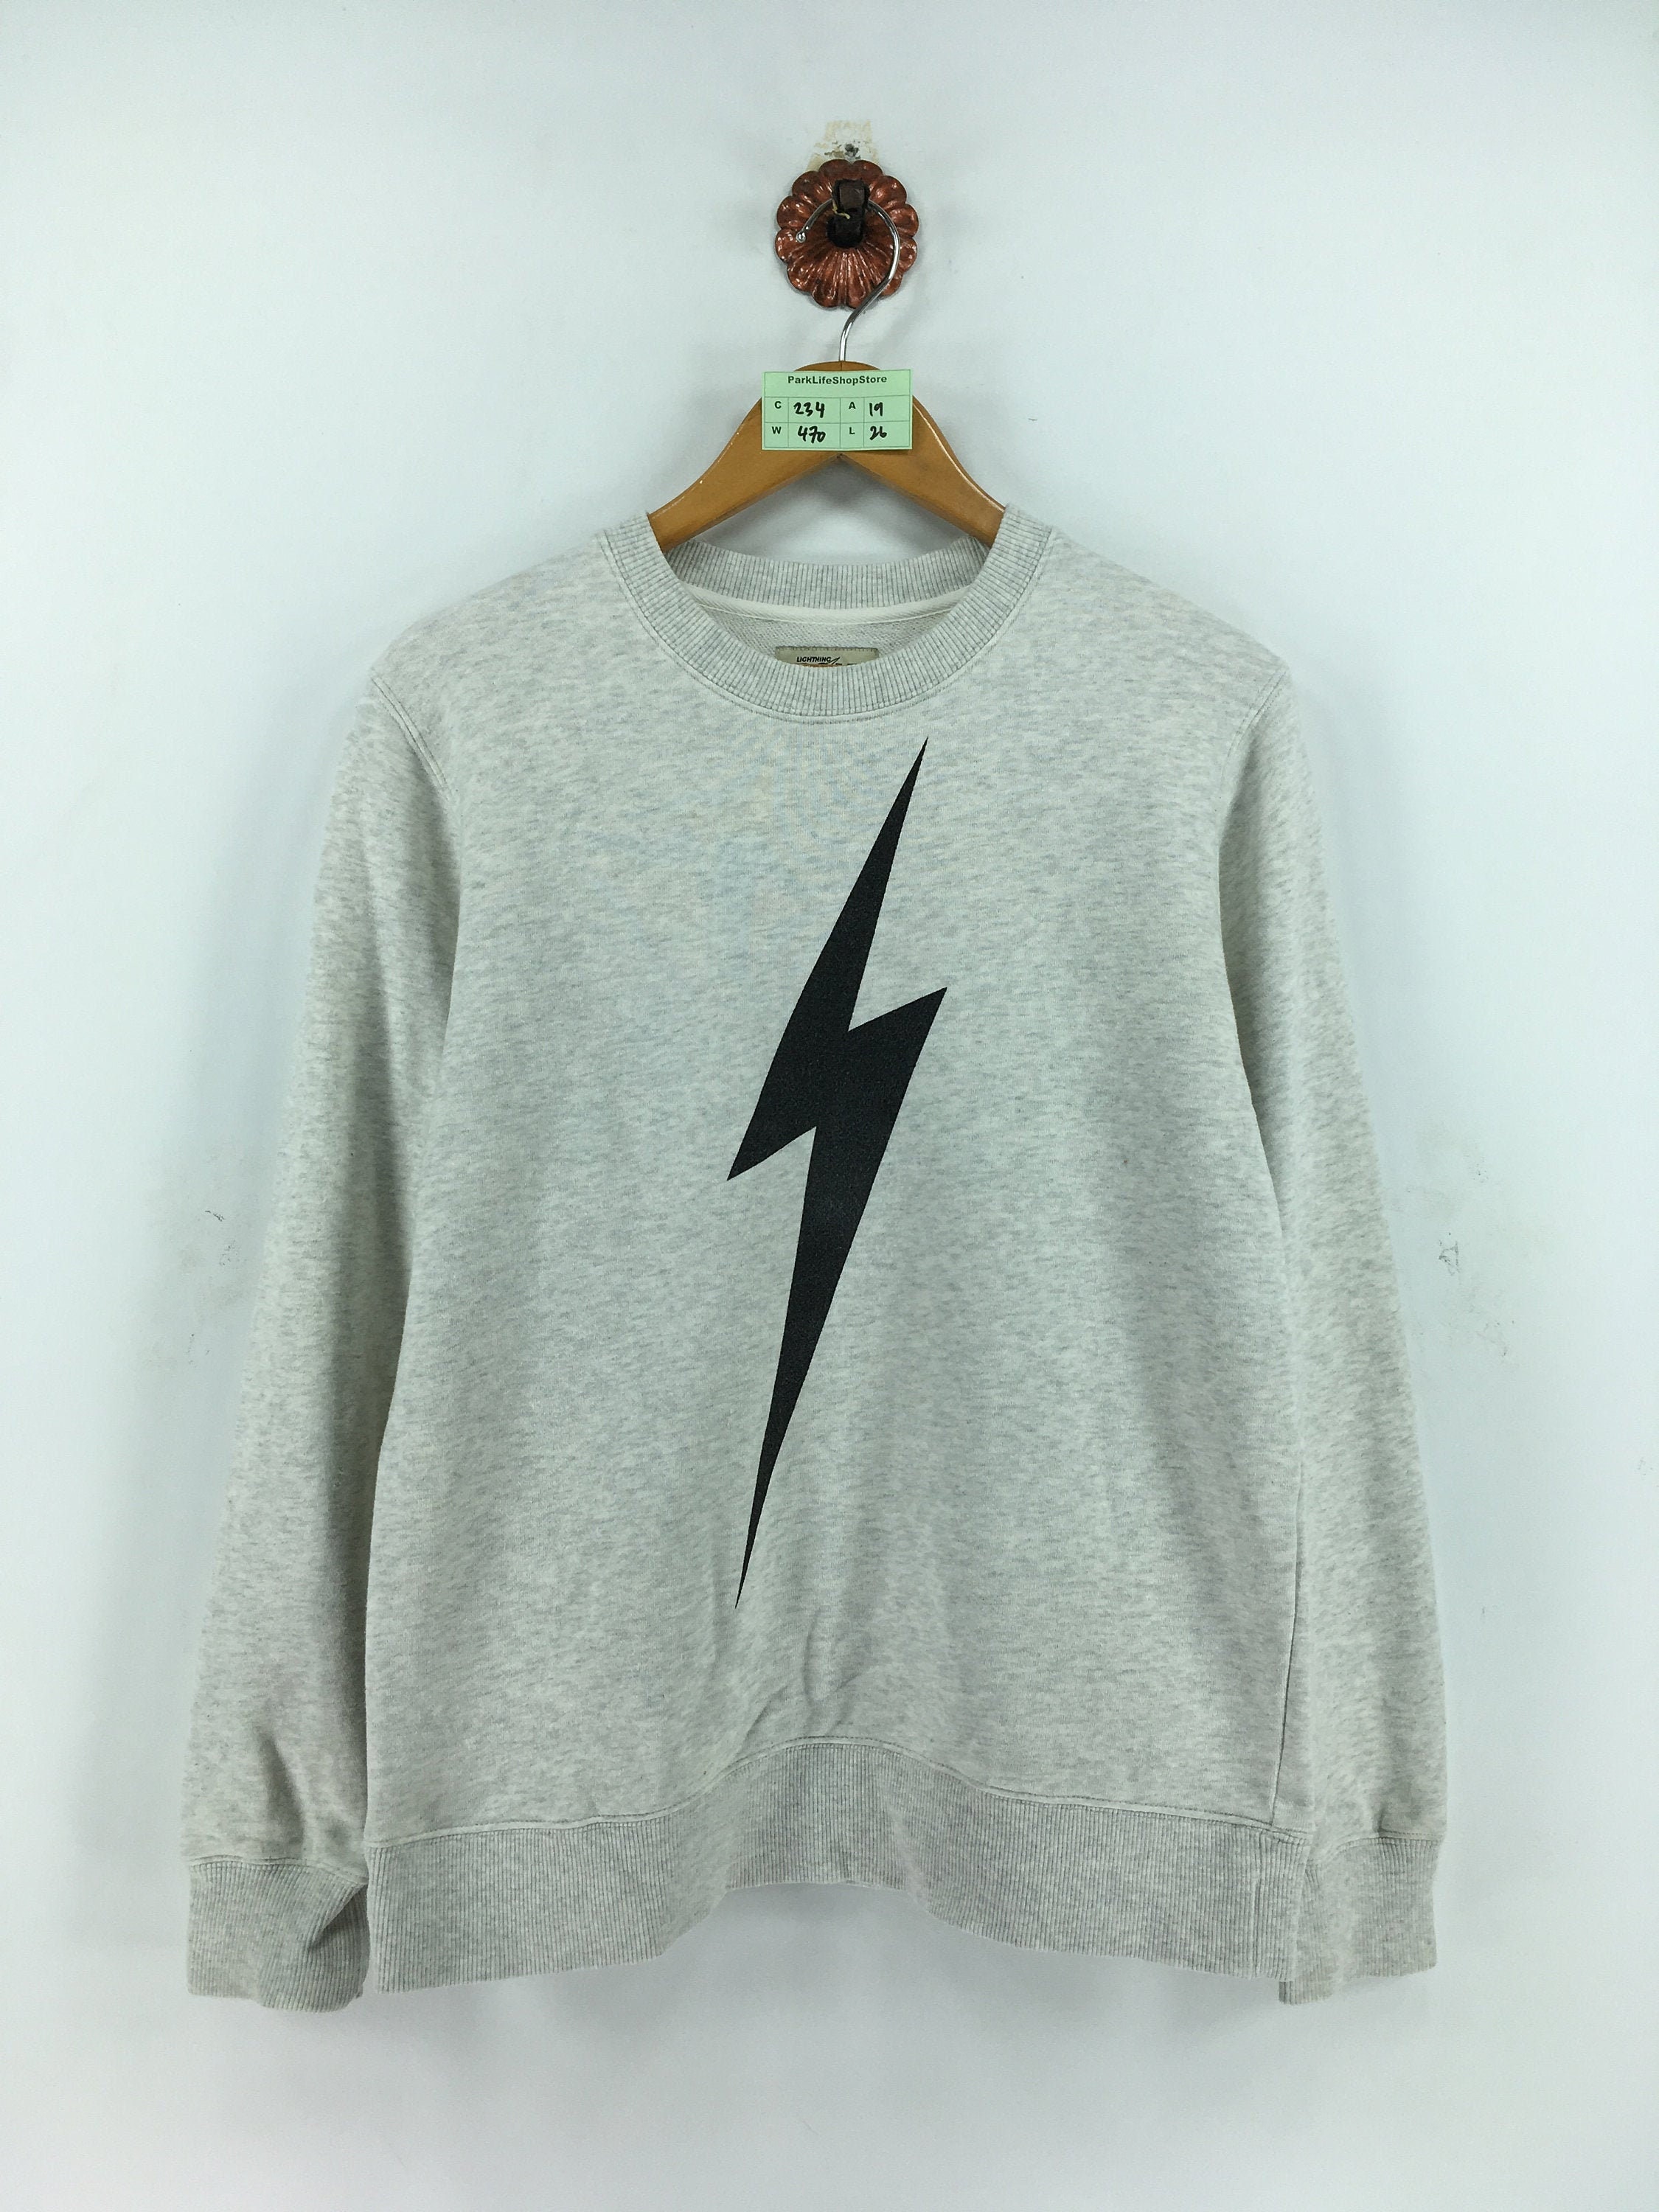 Lightning Bolt Sweater Sweatshirt Big Logo Medium Size Jumper.